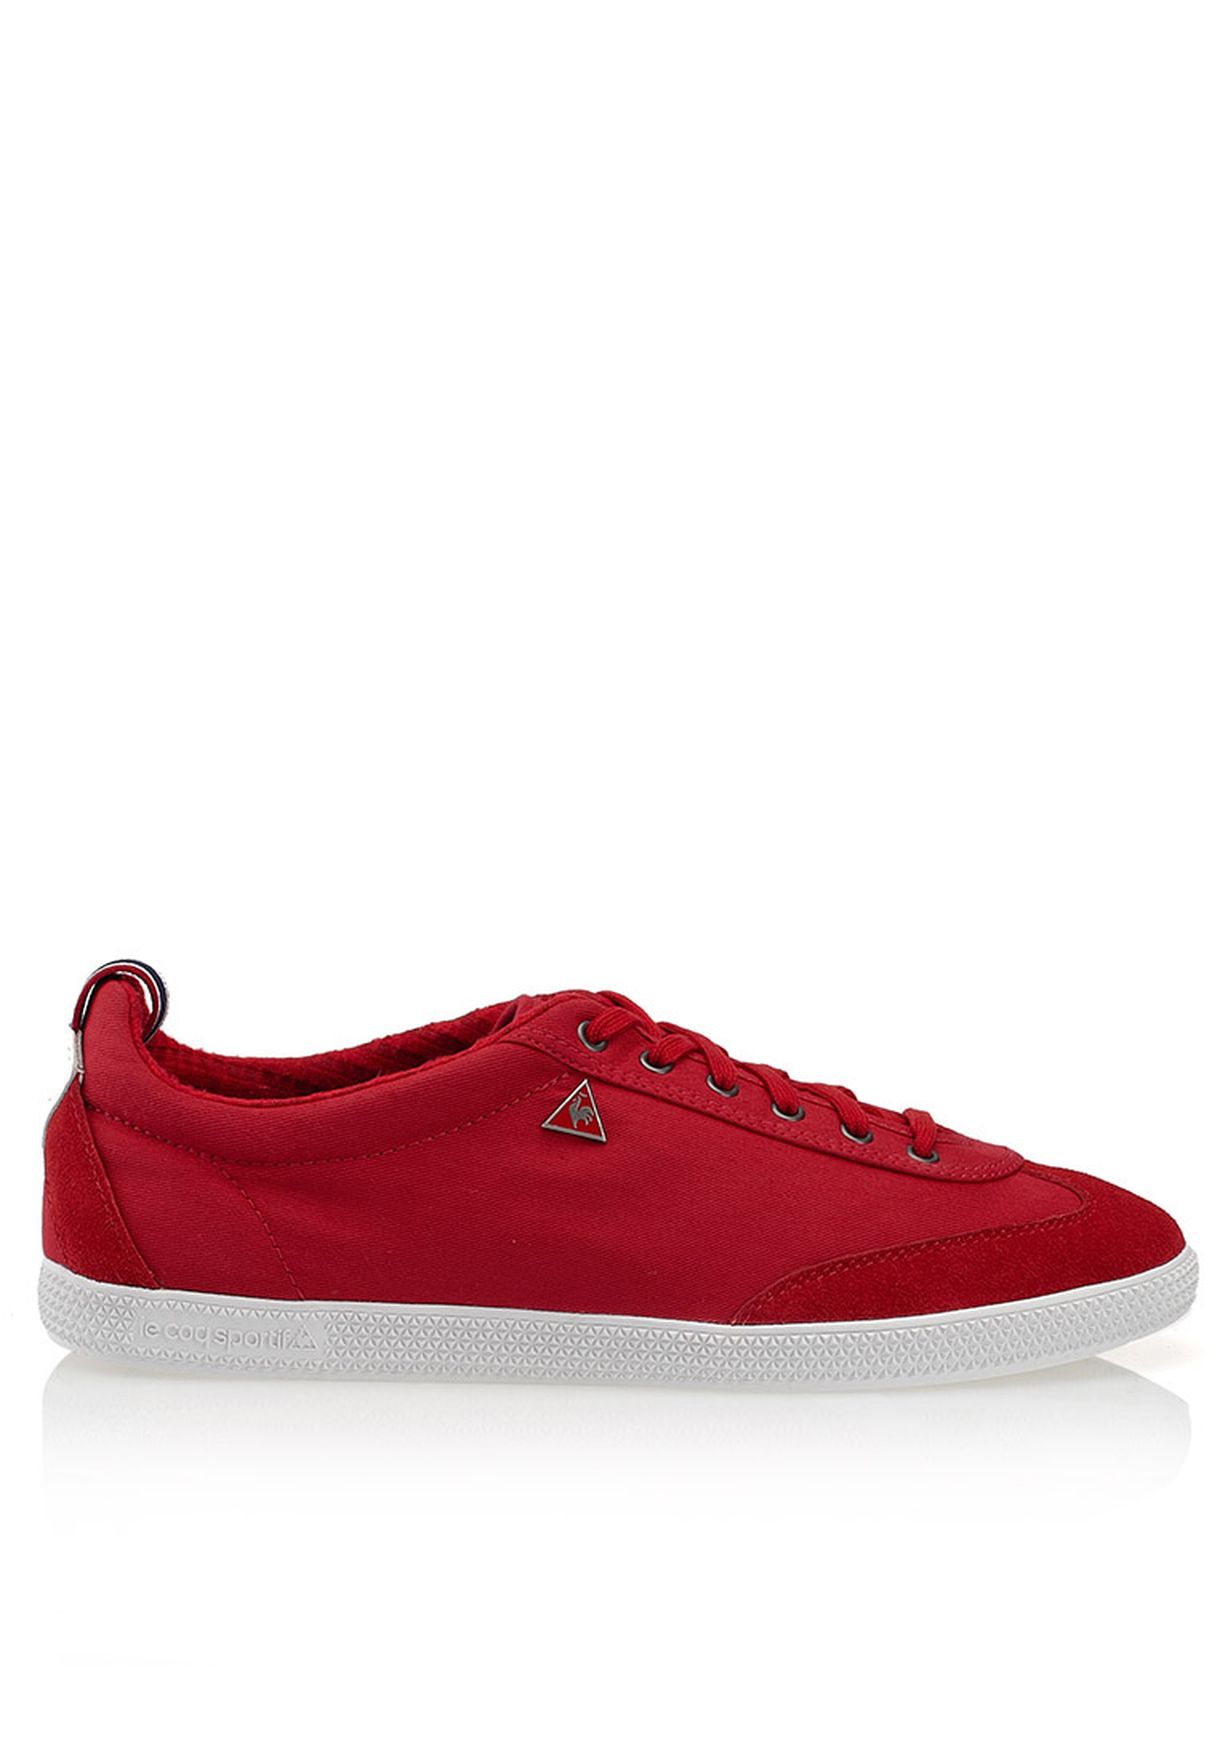 Buy Le Coq Sportif red Sneakers for Men 